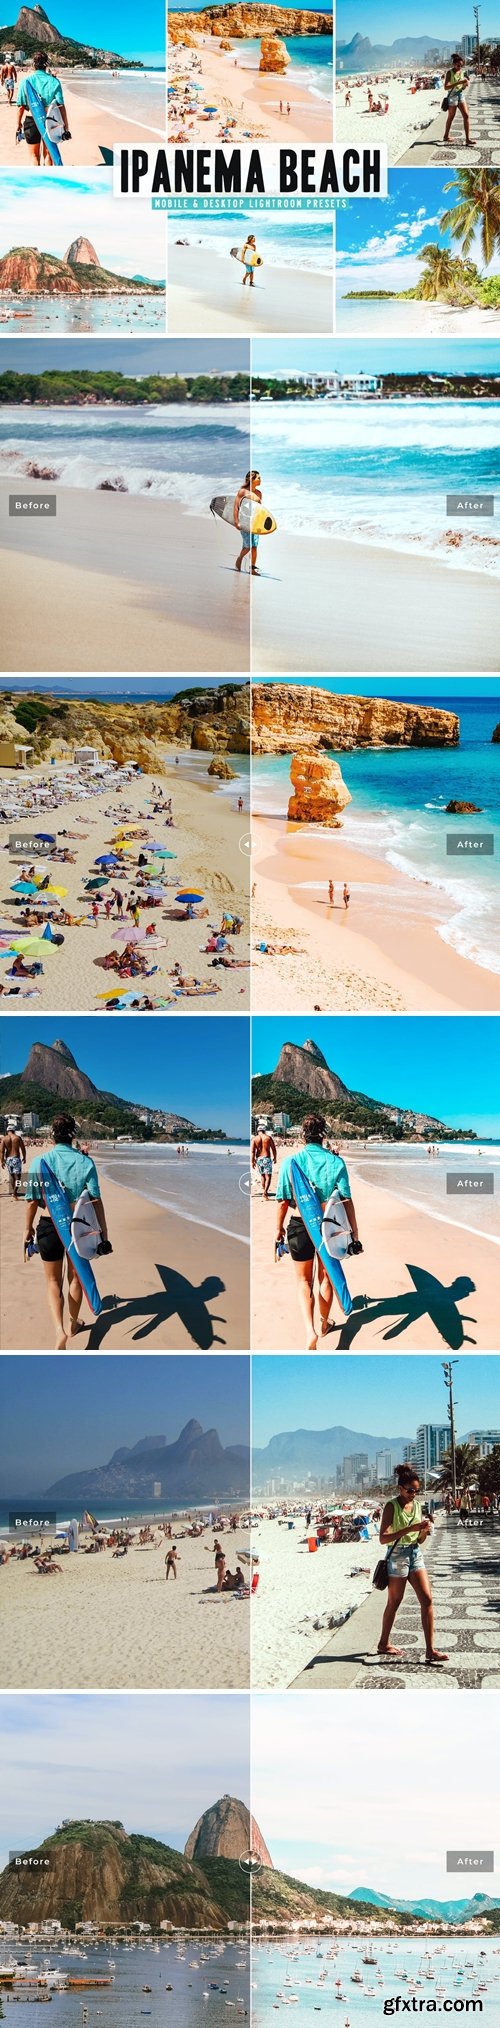 Ipanema Beach Mobile & Desktop Lightroom Presets